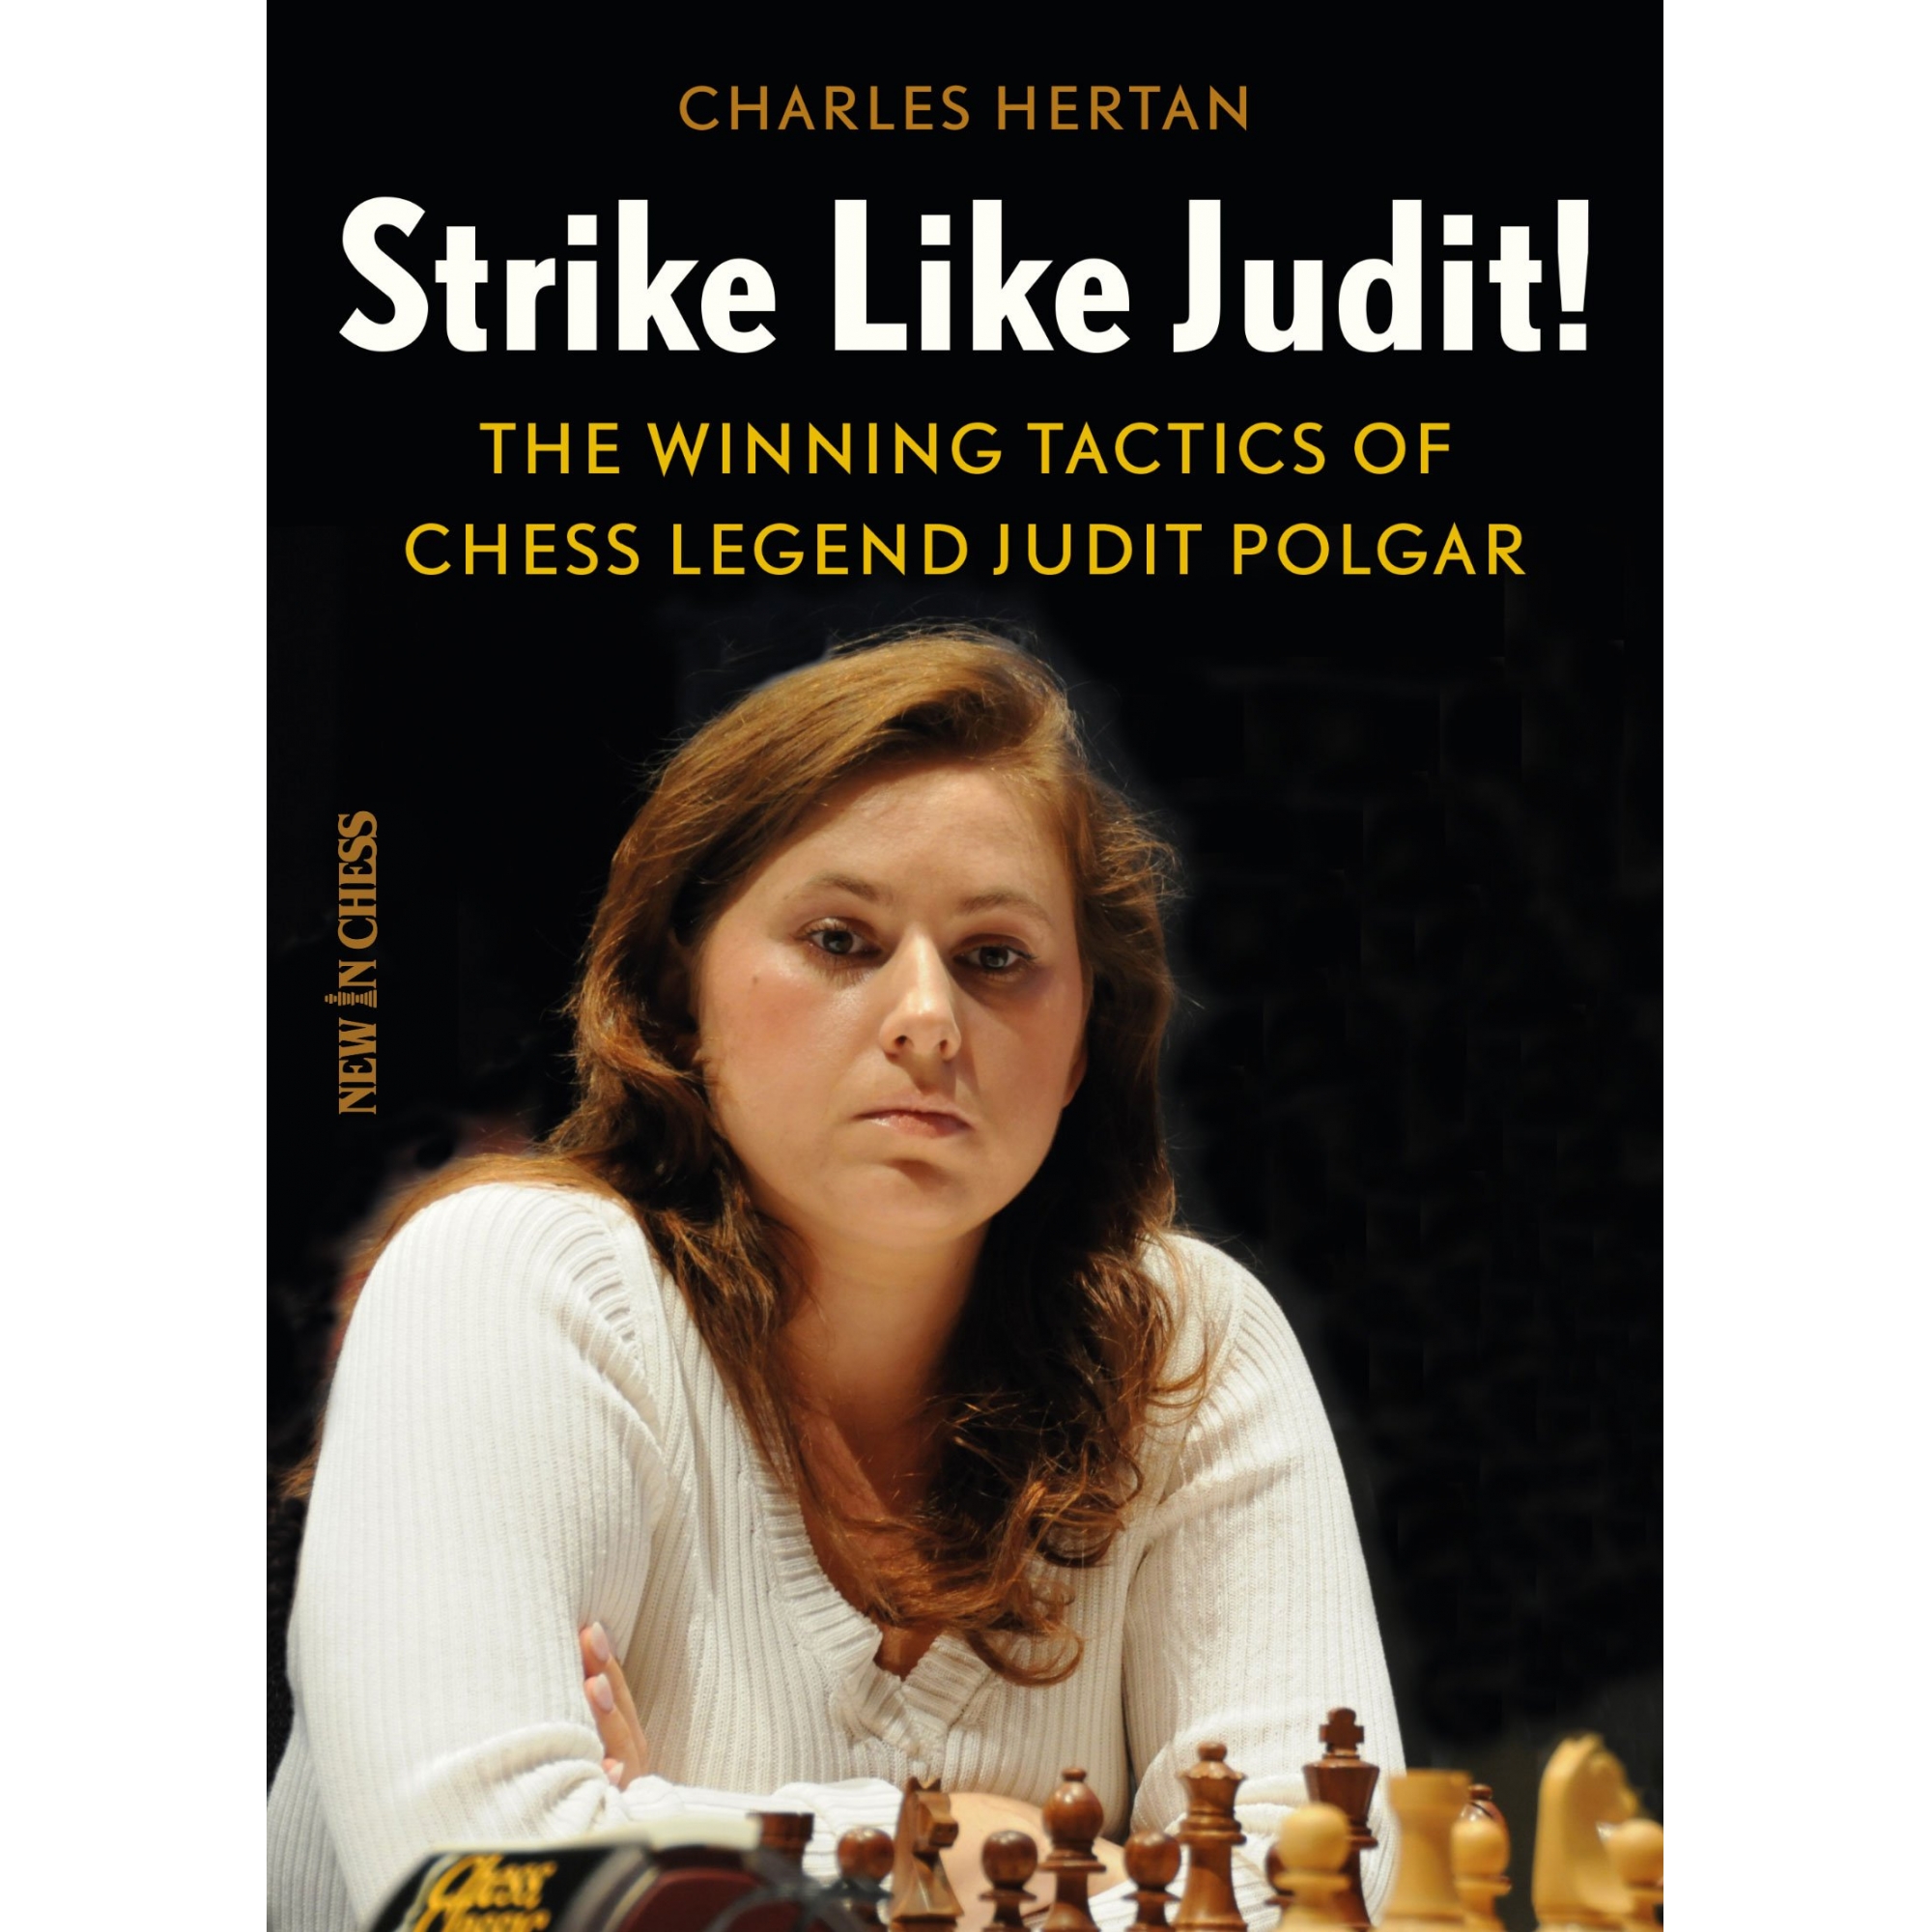 Strike like Judit! - The winning tactics of chess legend Judit Polgar